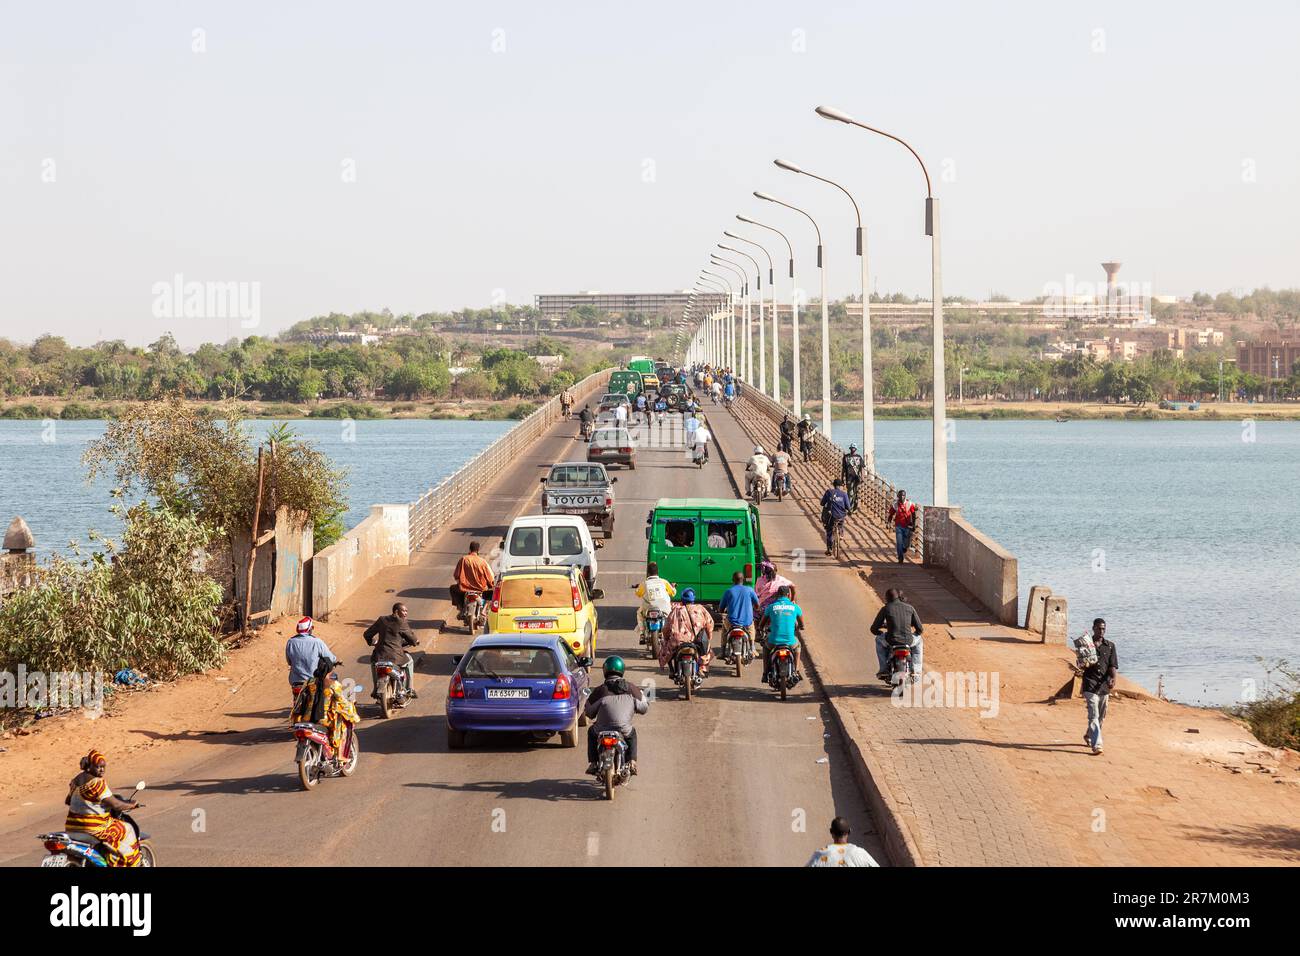 Trafic intense sur le pont des Martyrs, enjambant le fleuve Niger à Bamako, Mali. Banque D'Images